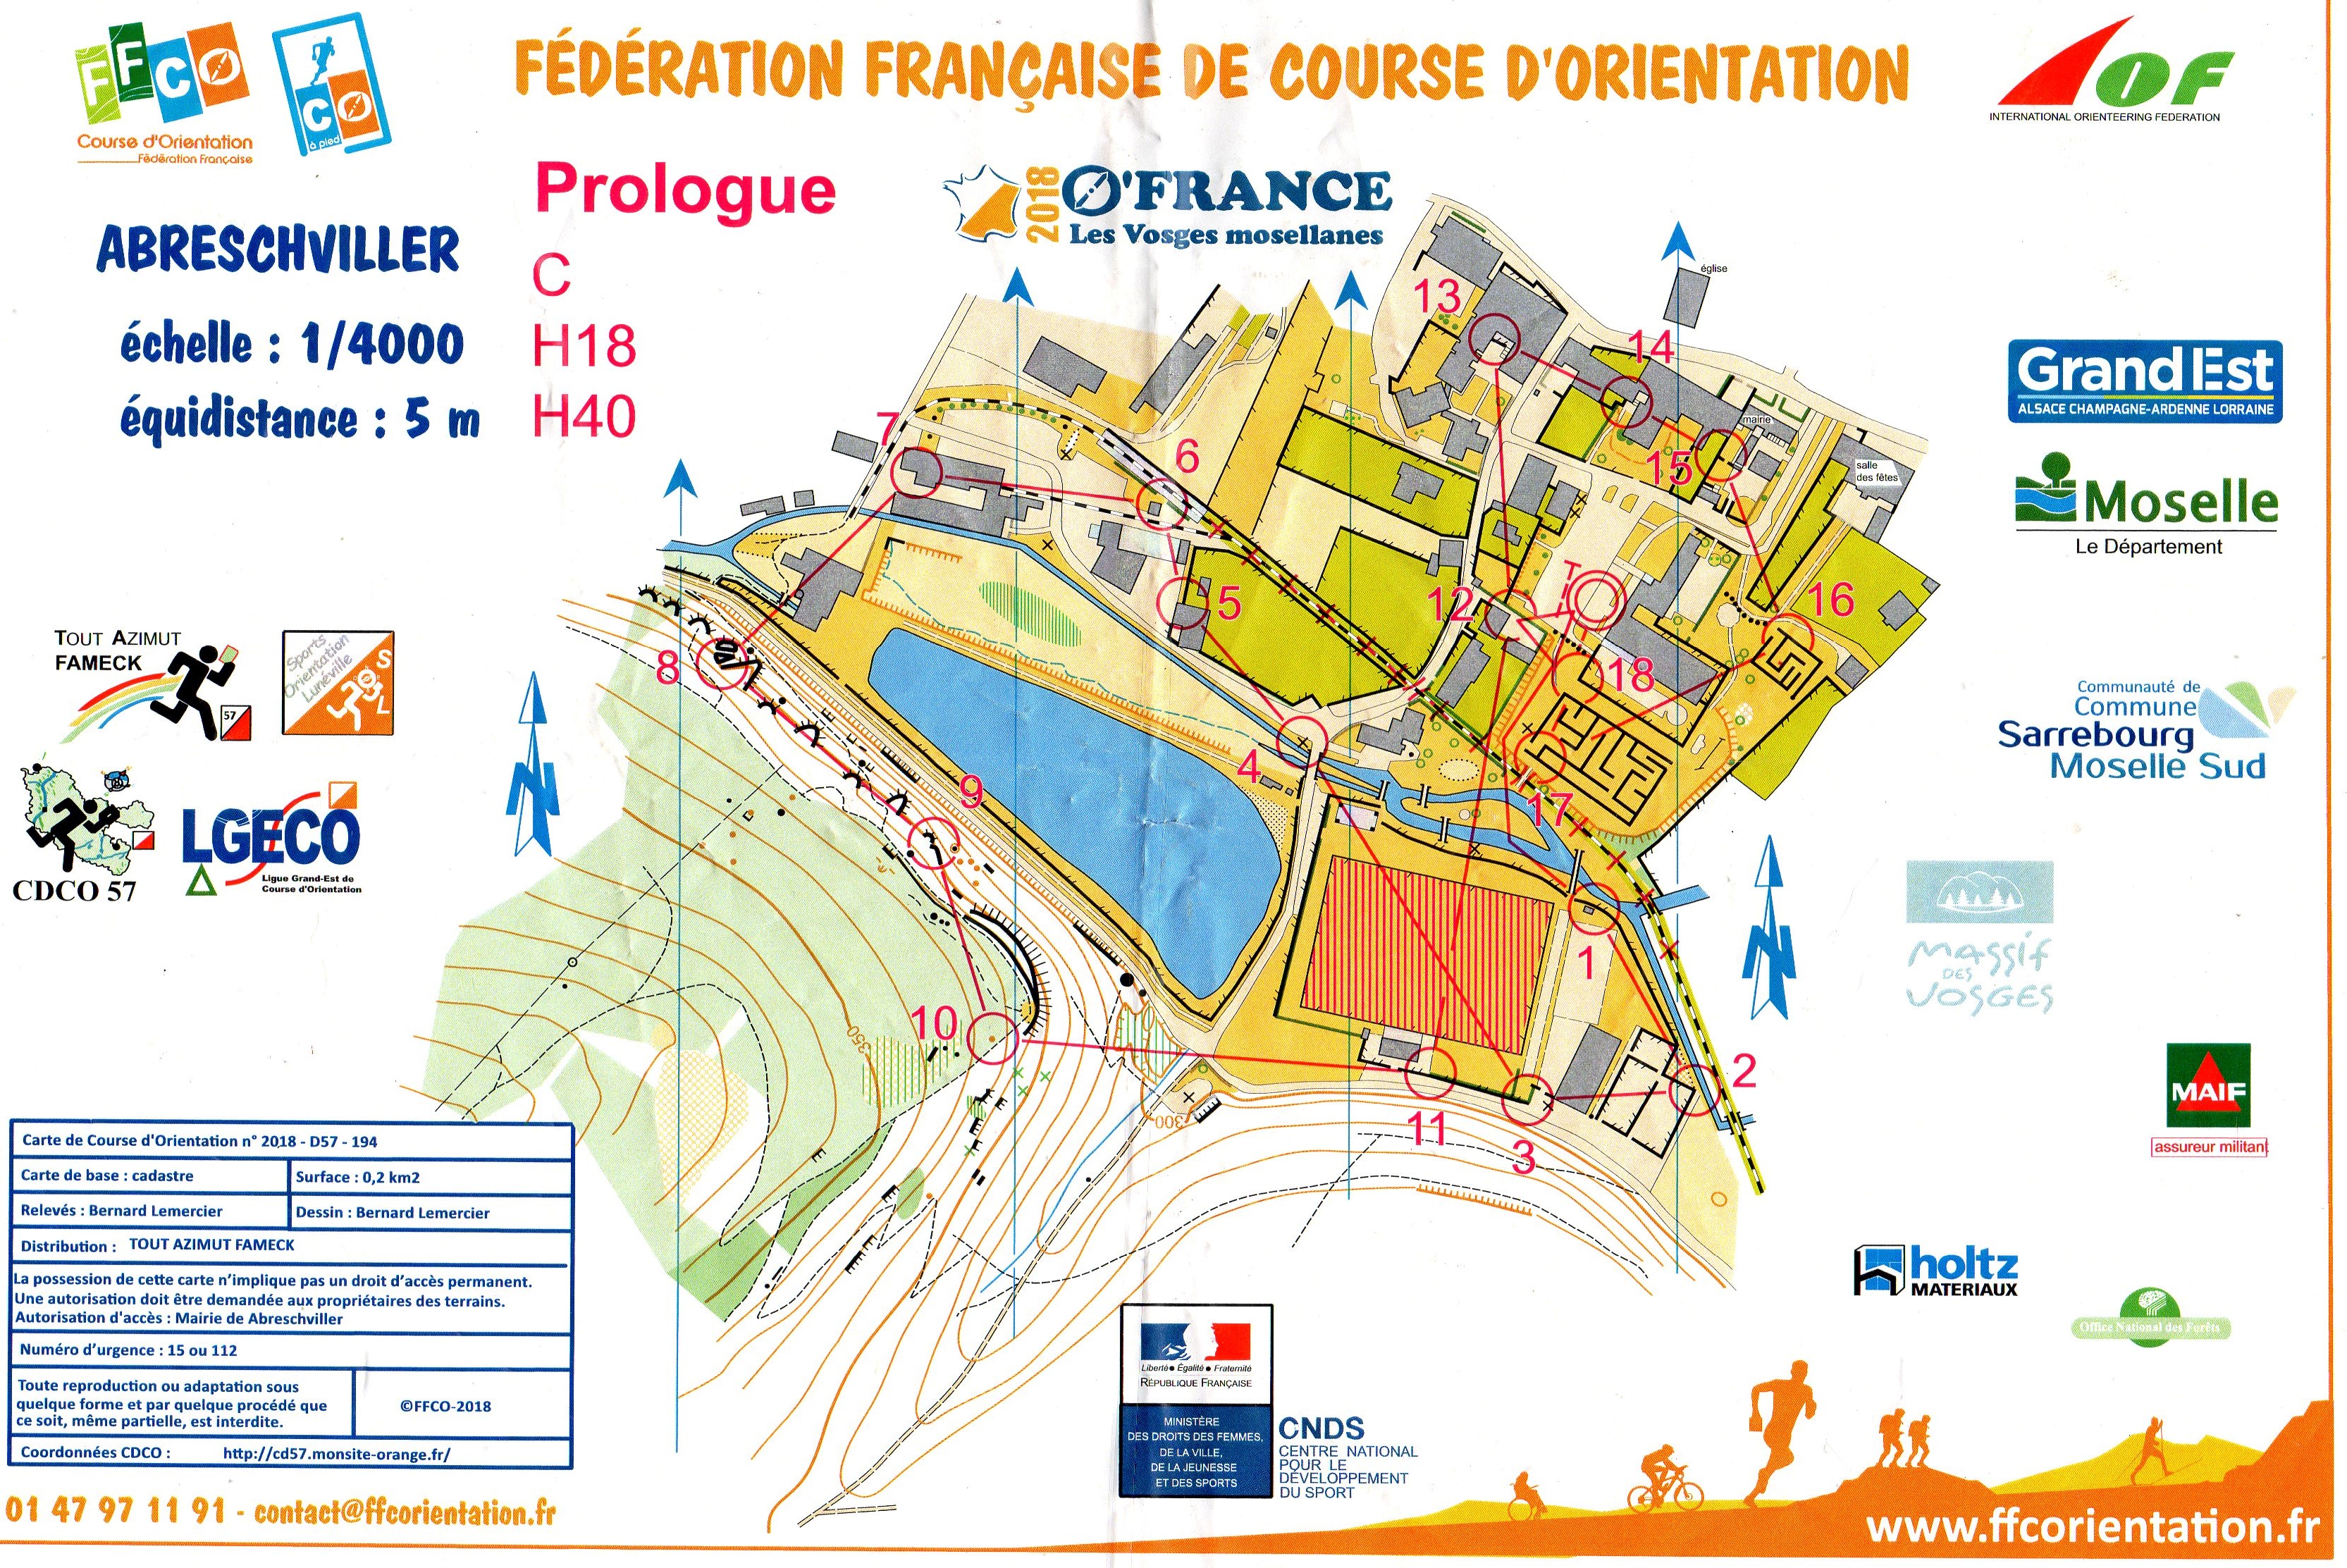 Prologue O'France 2018. Sprint (08/07/2018)